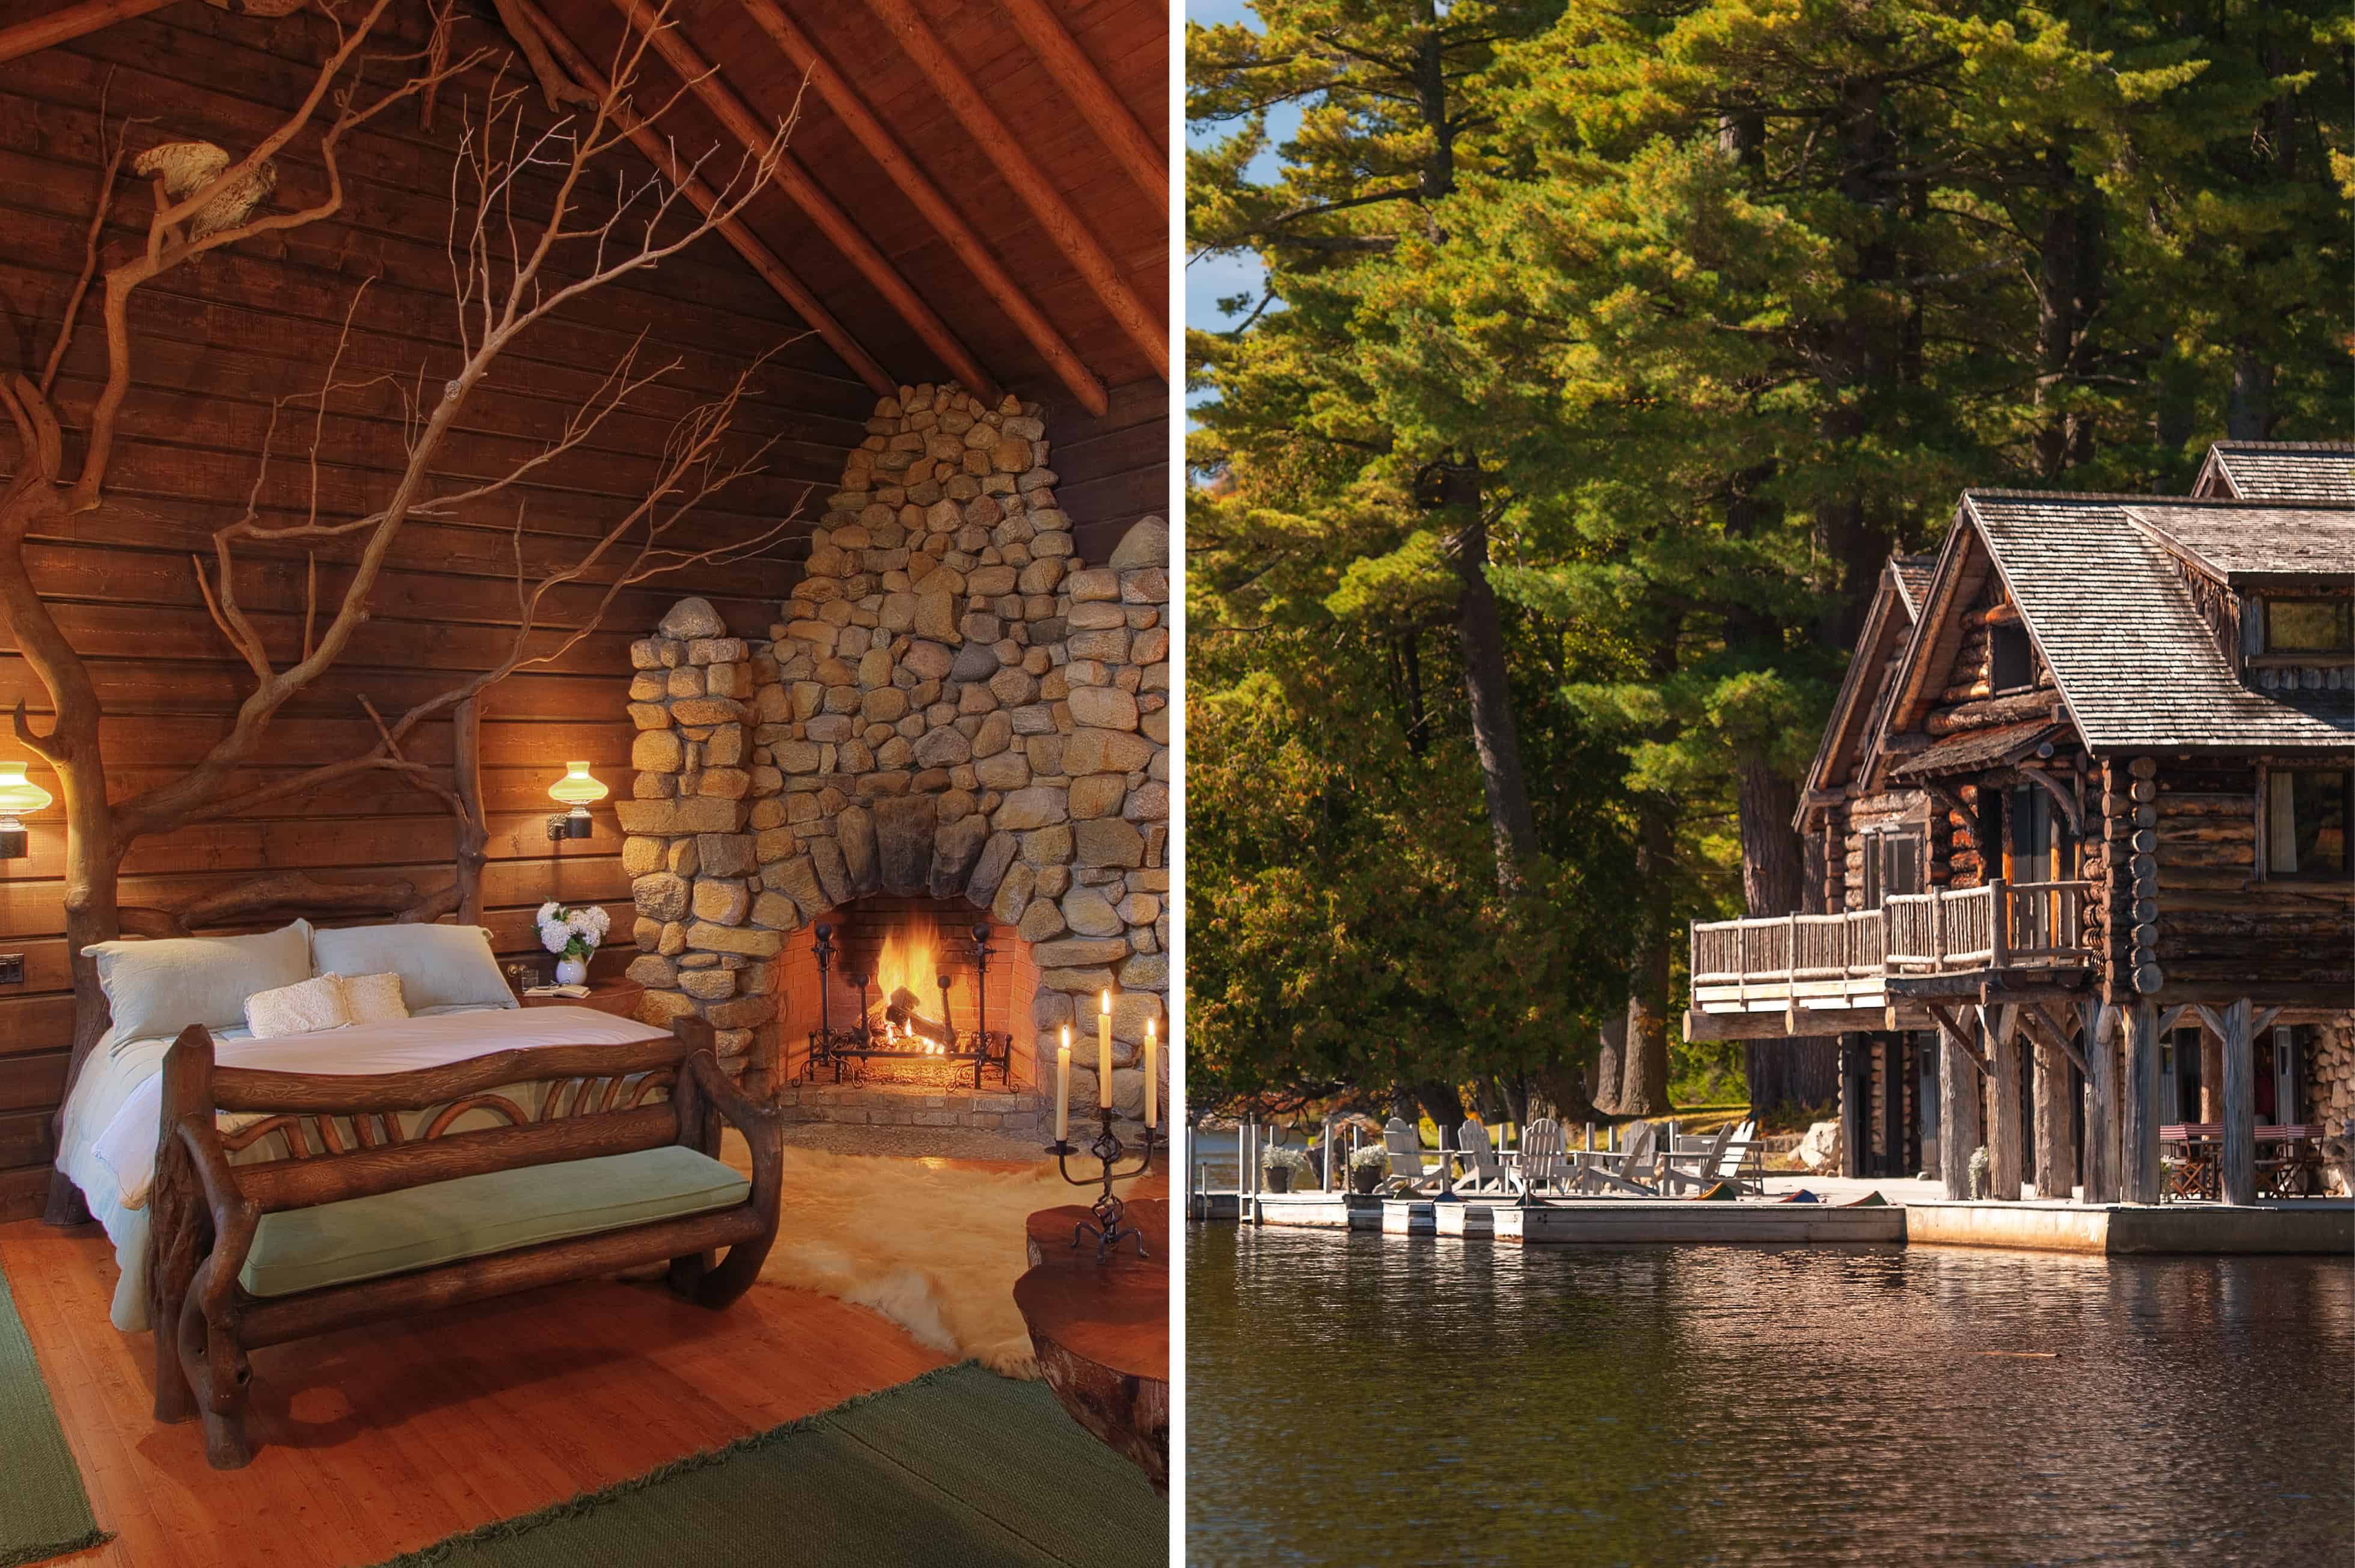 Lake Kora resort bedroom and lakefront in the Adirondacks New York